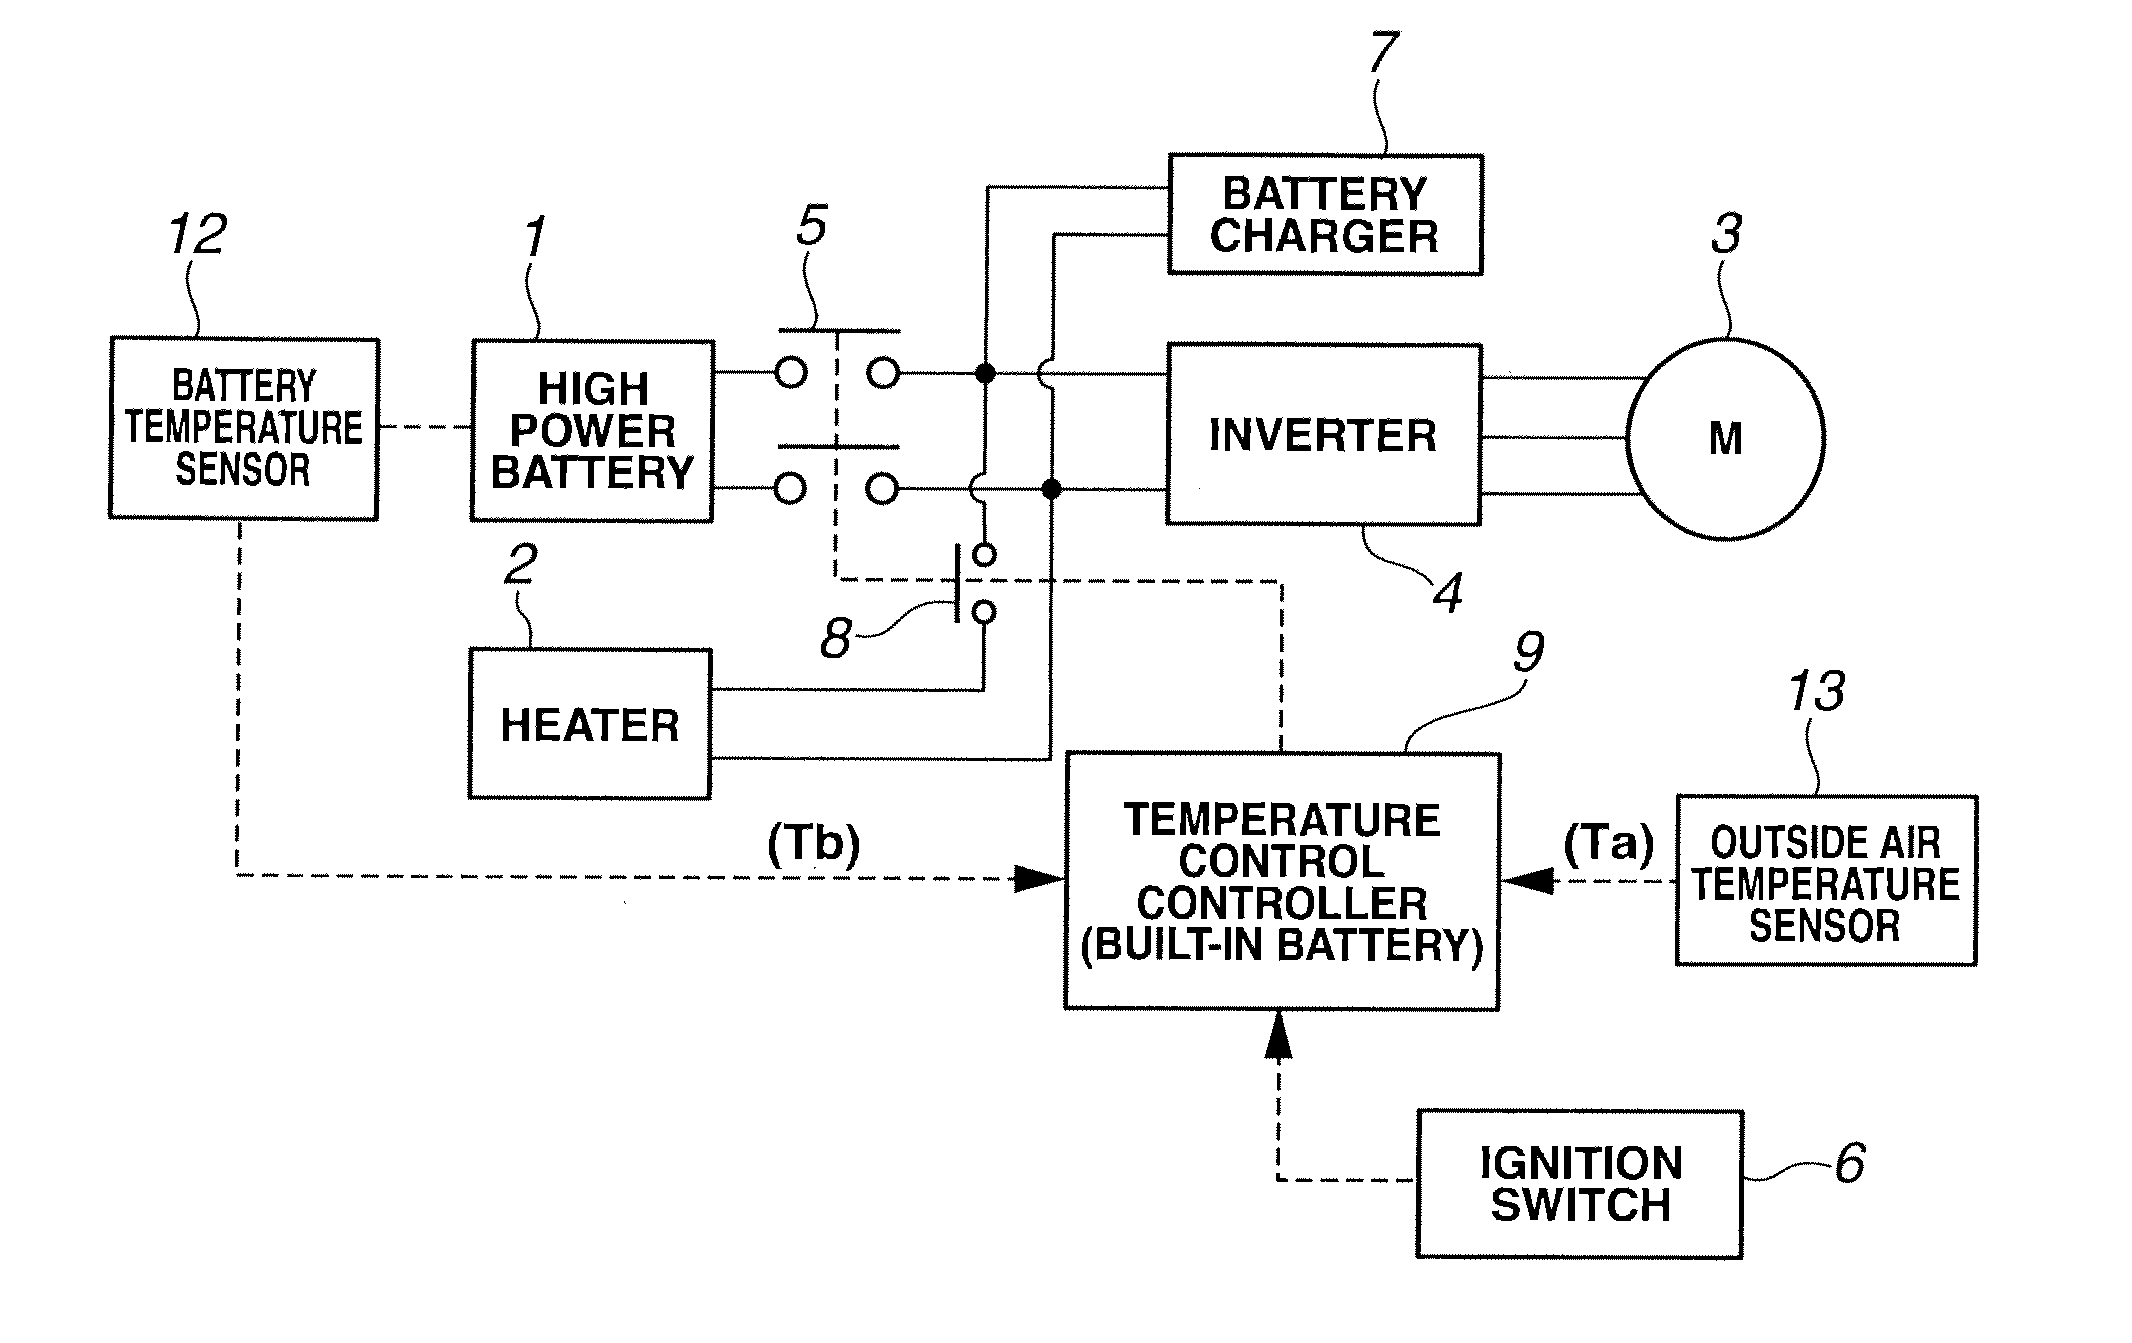 Battery temperature control device